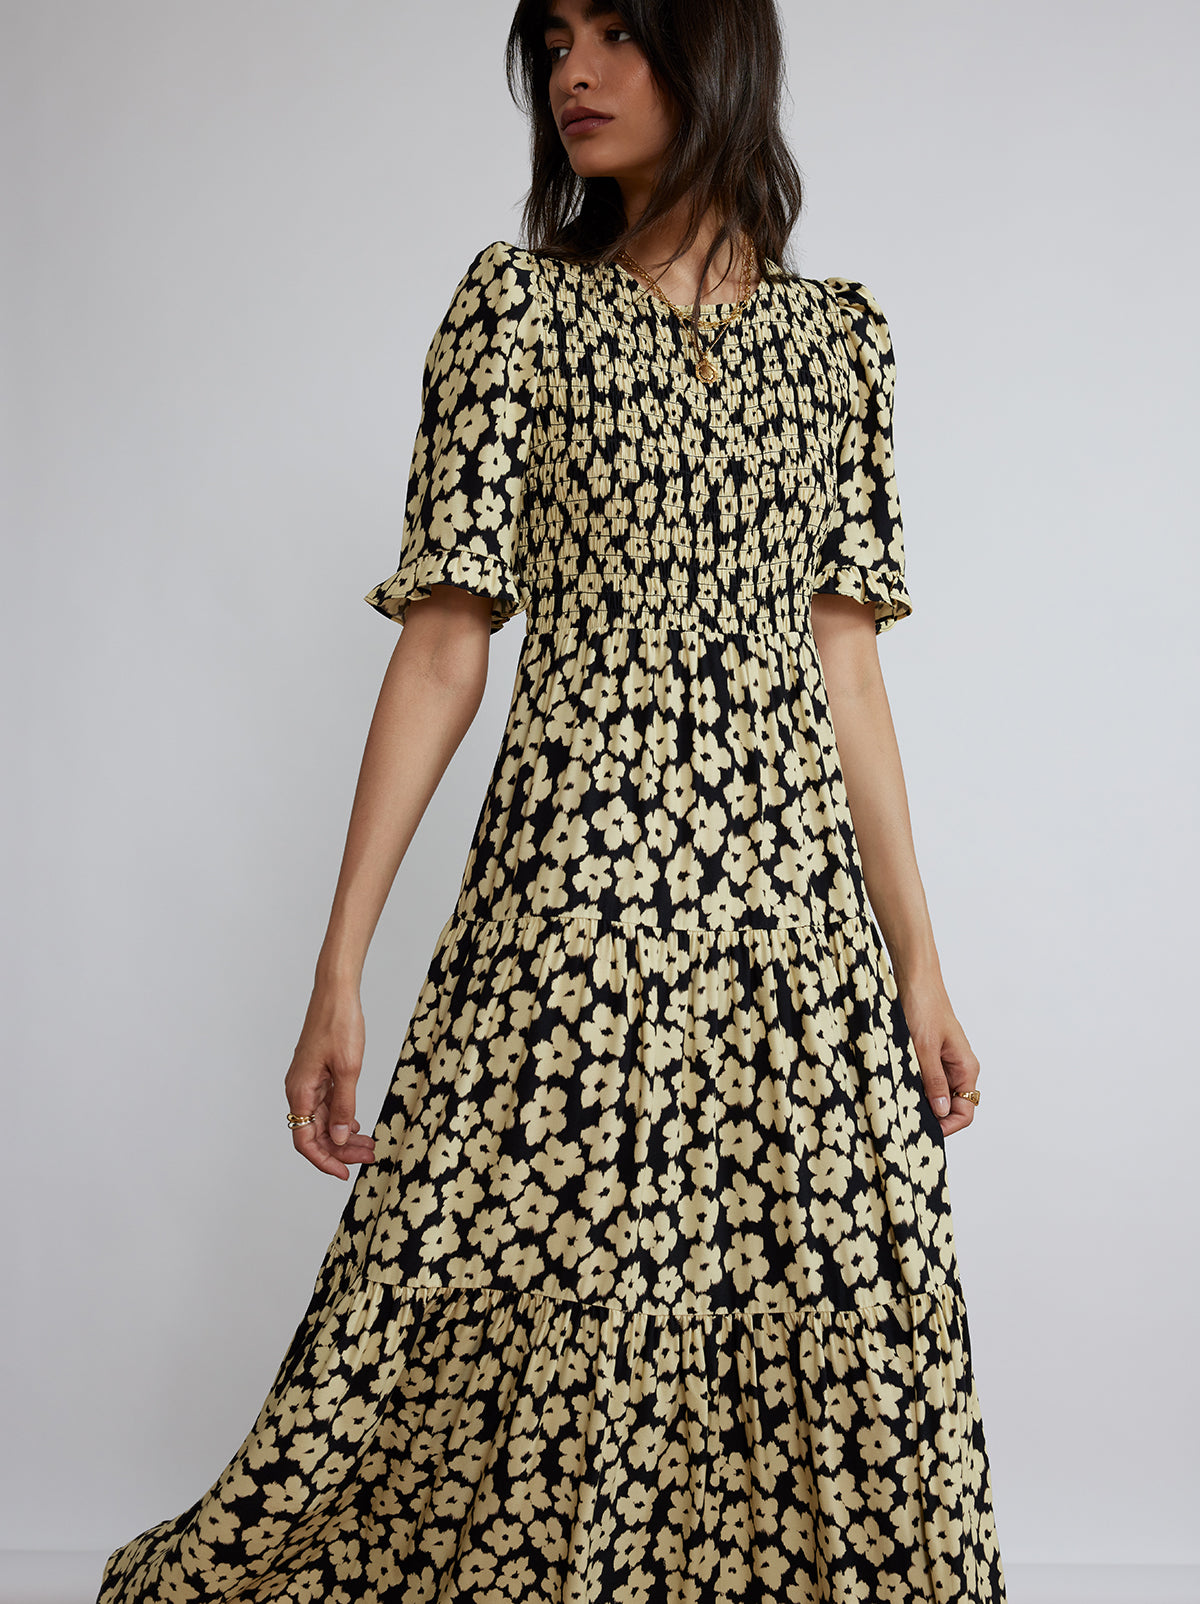 Gracie Blurred Floral Shirred Dress By KITRI Studio